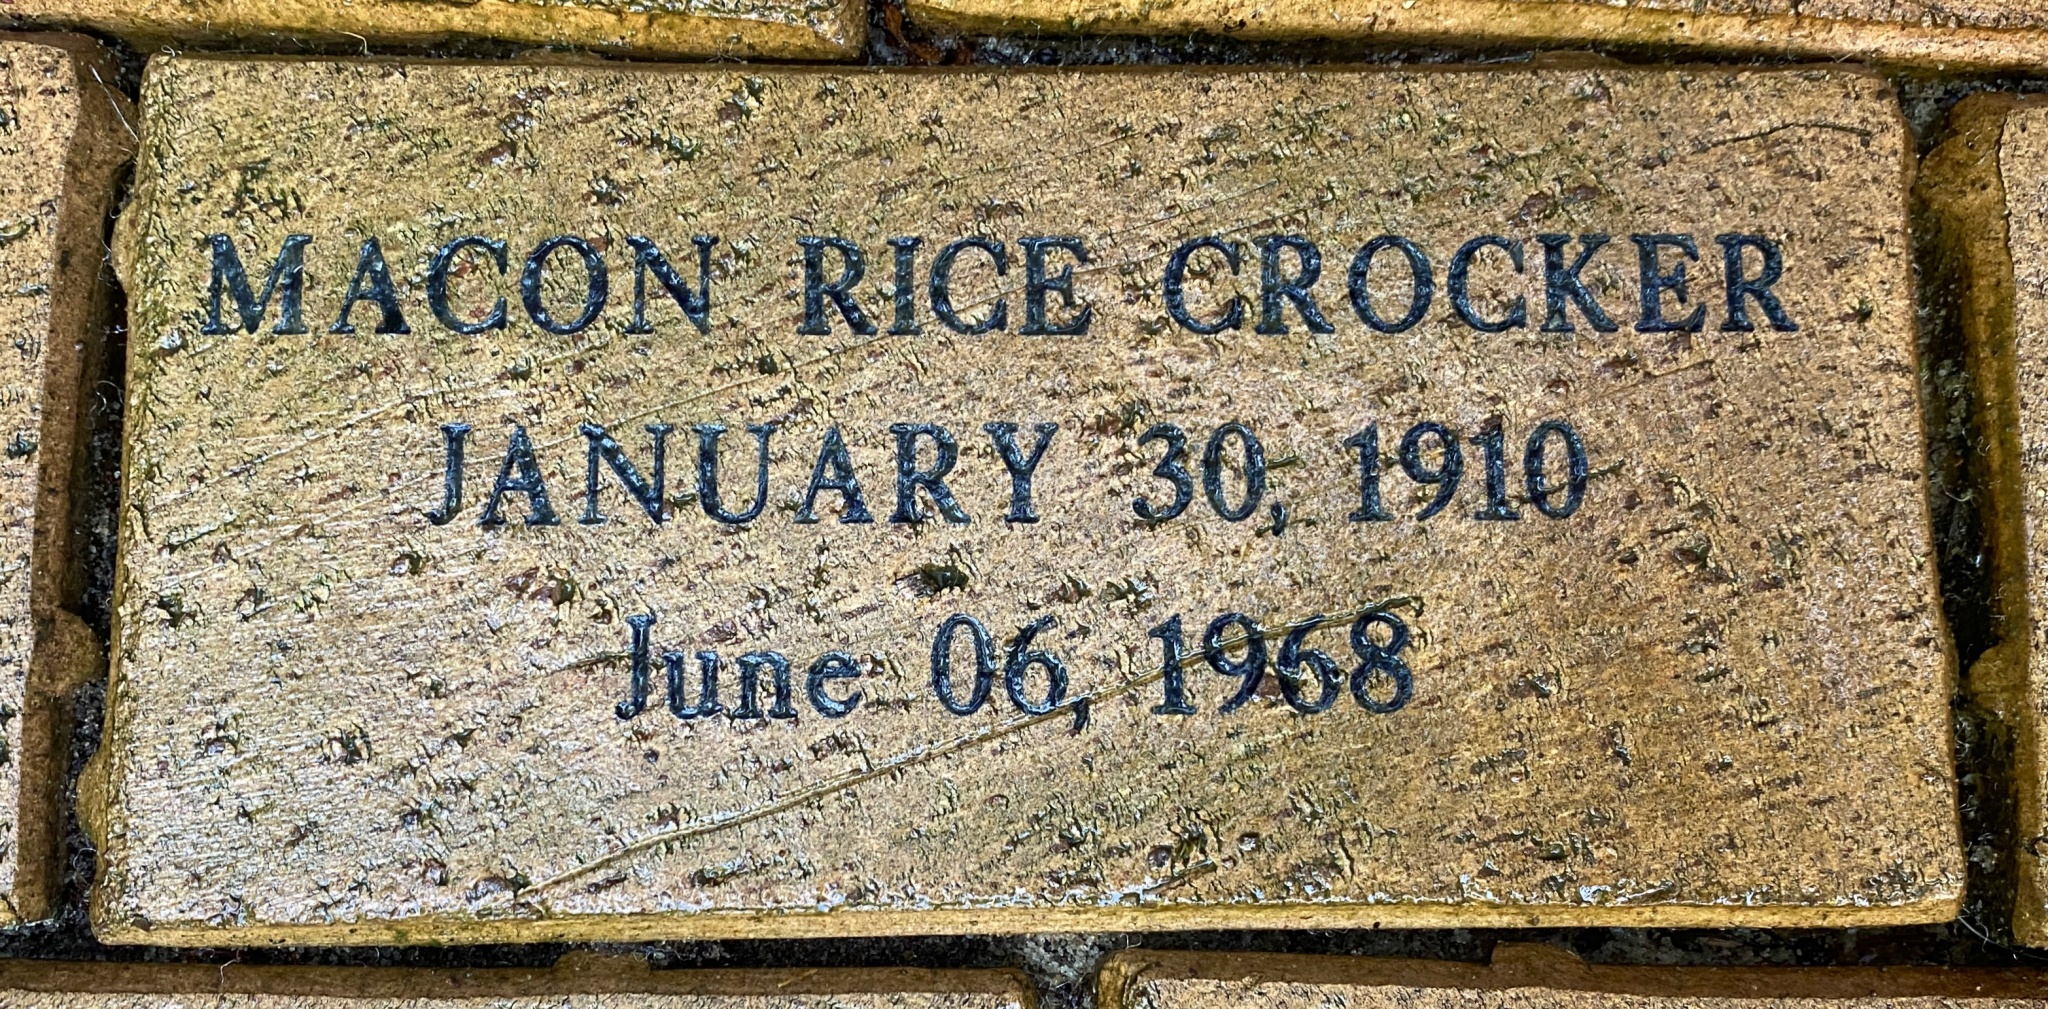 MACON RICE CROCKER JANUARY 30, 1910 June 06, 1968